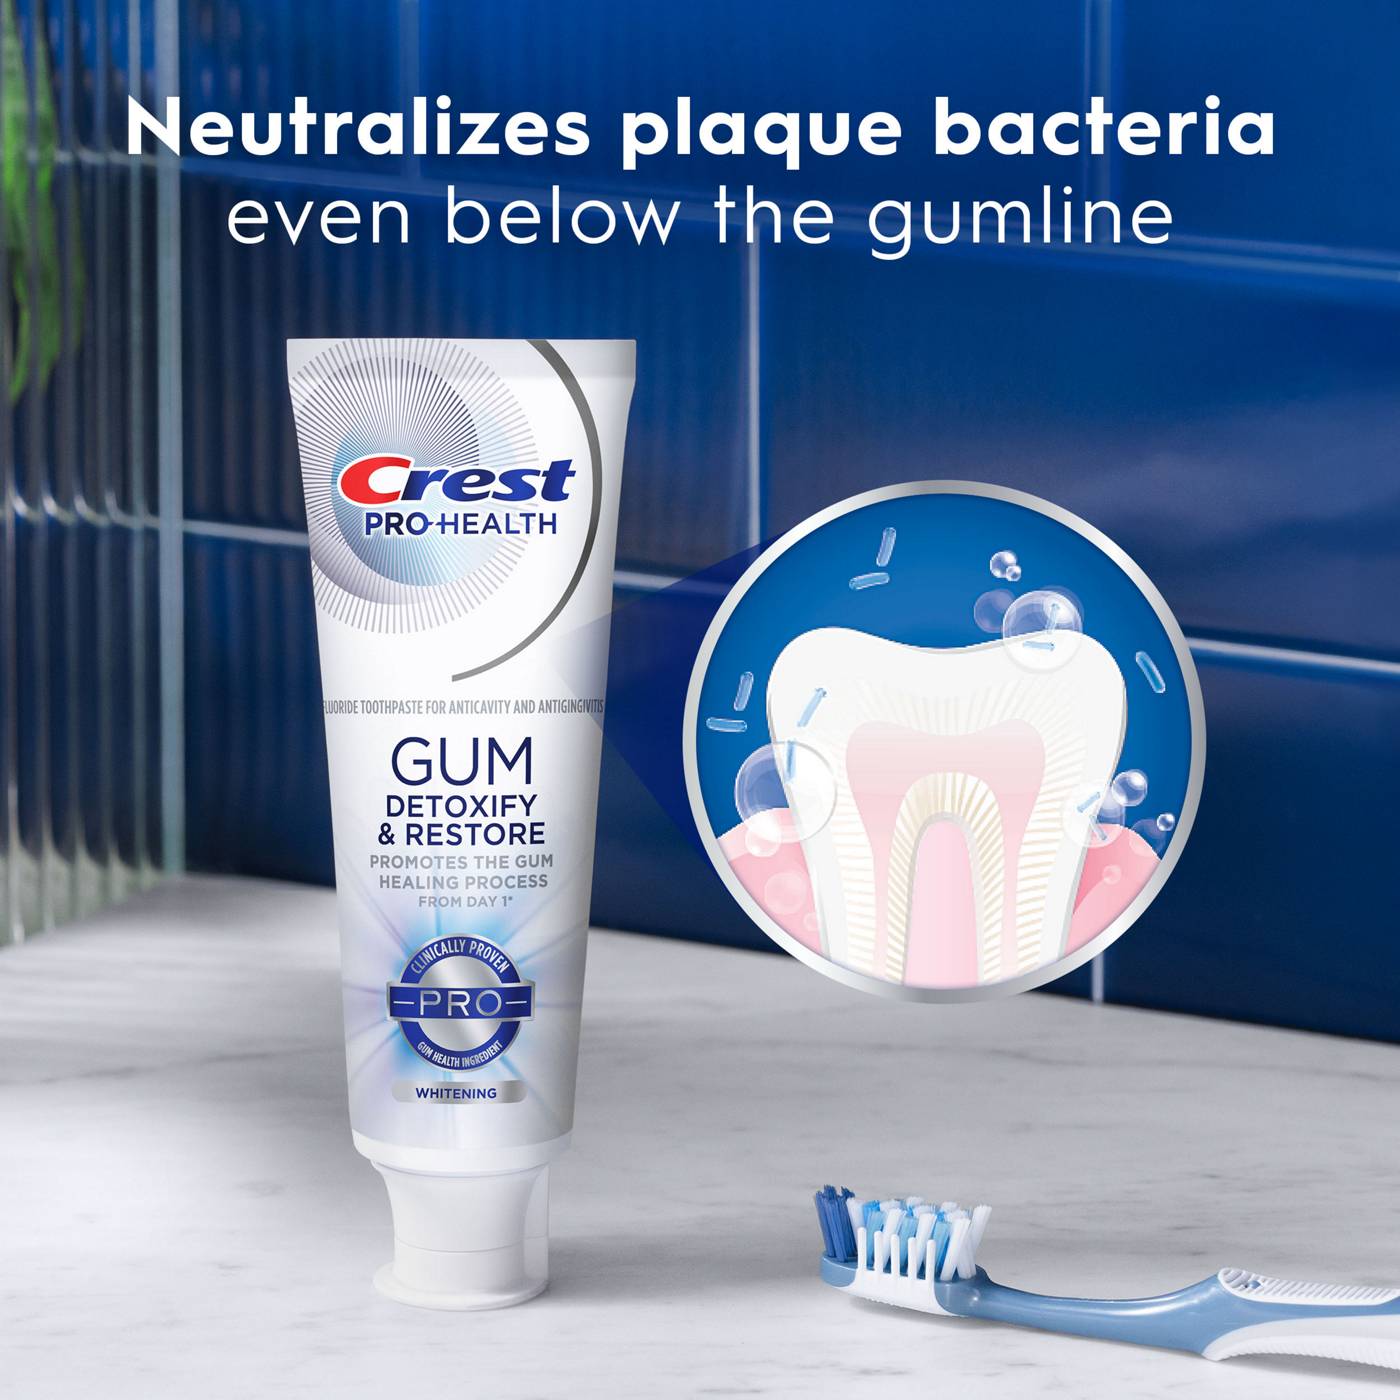 Crest Pro Health Gum Detoxify & Restore - Whitening; image 5 of 8